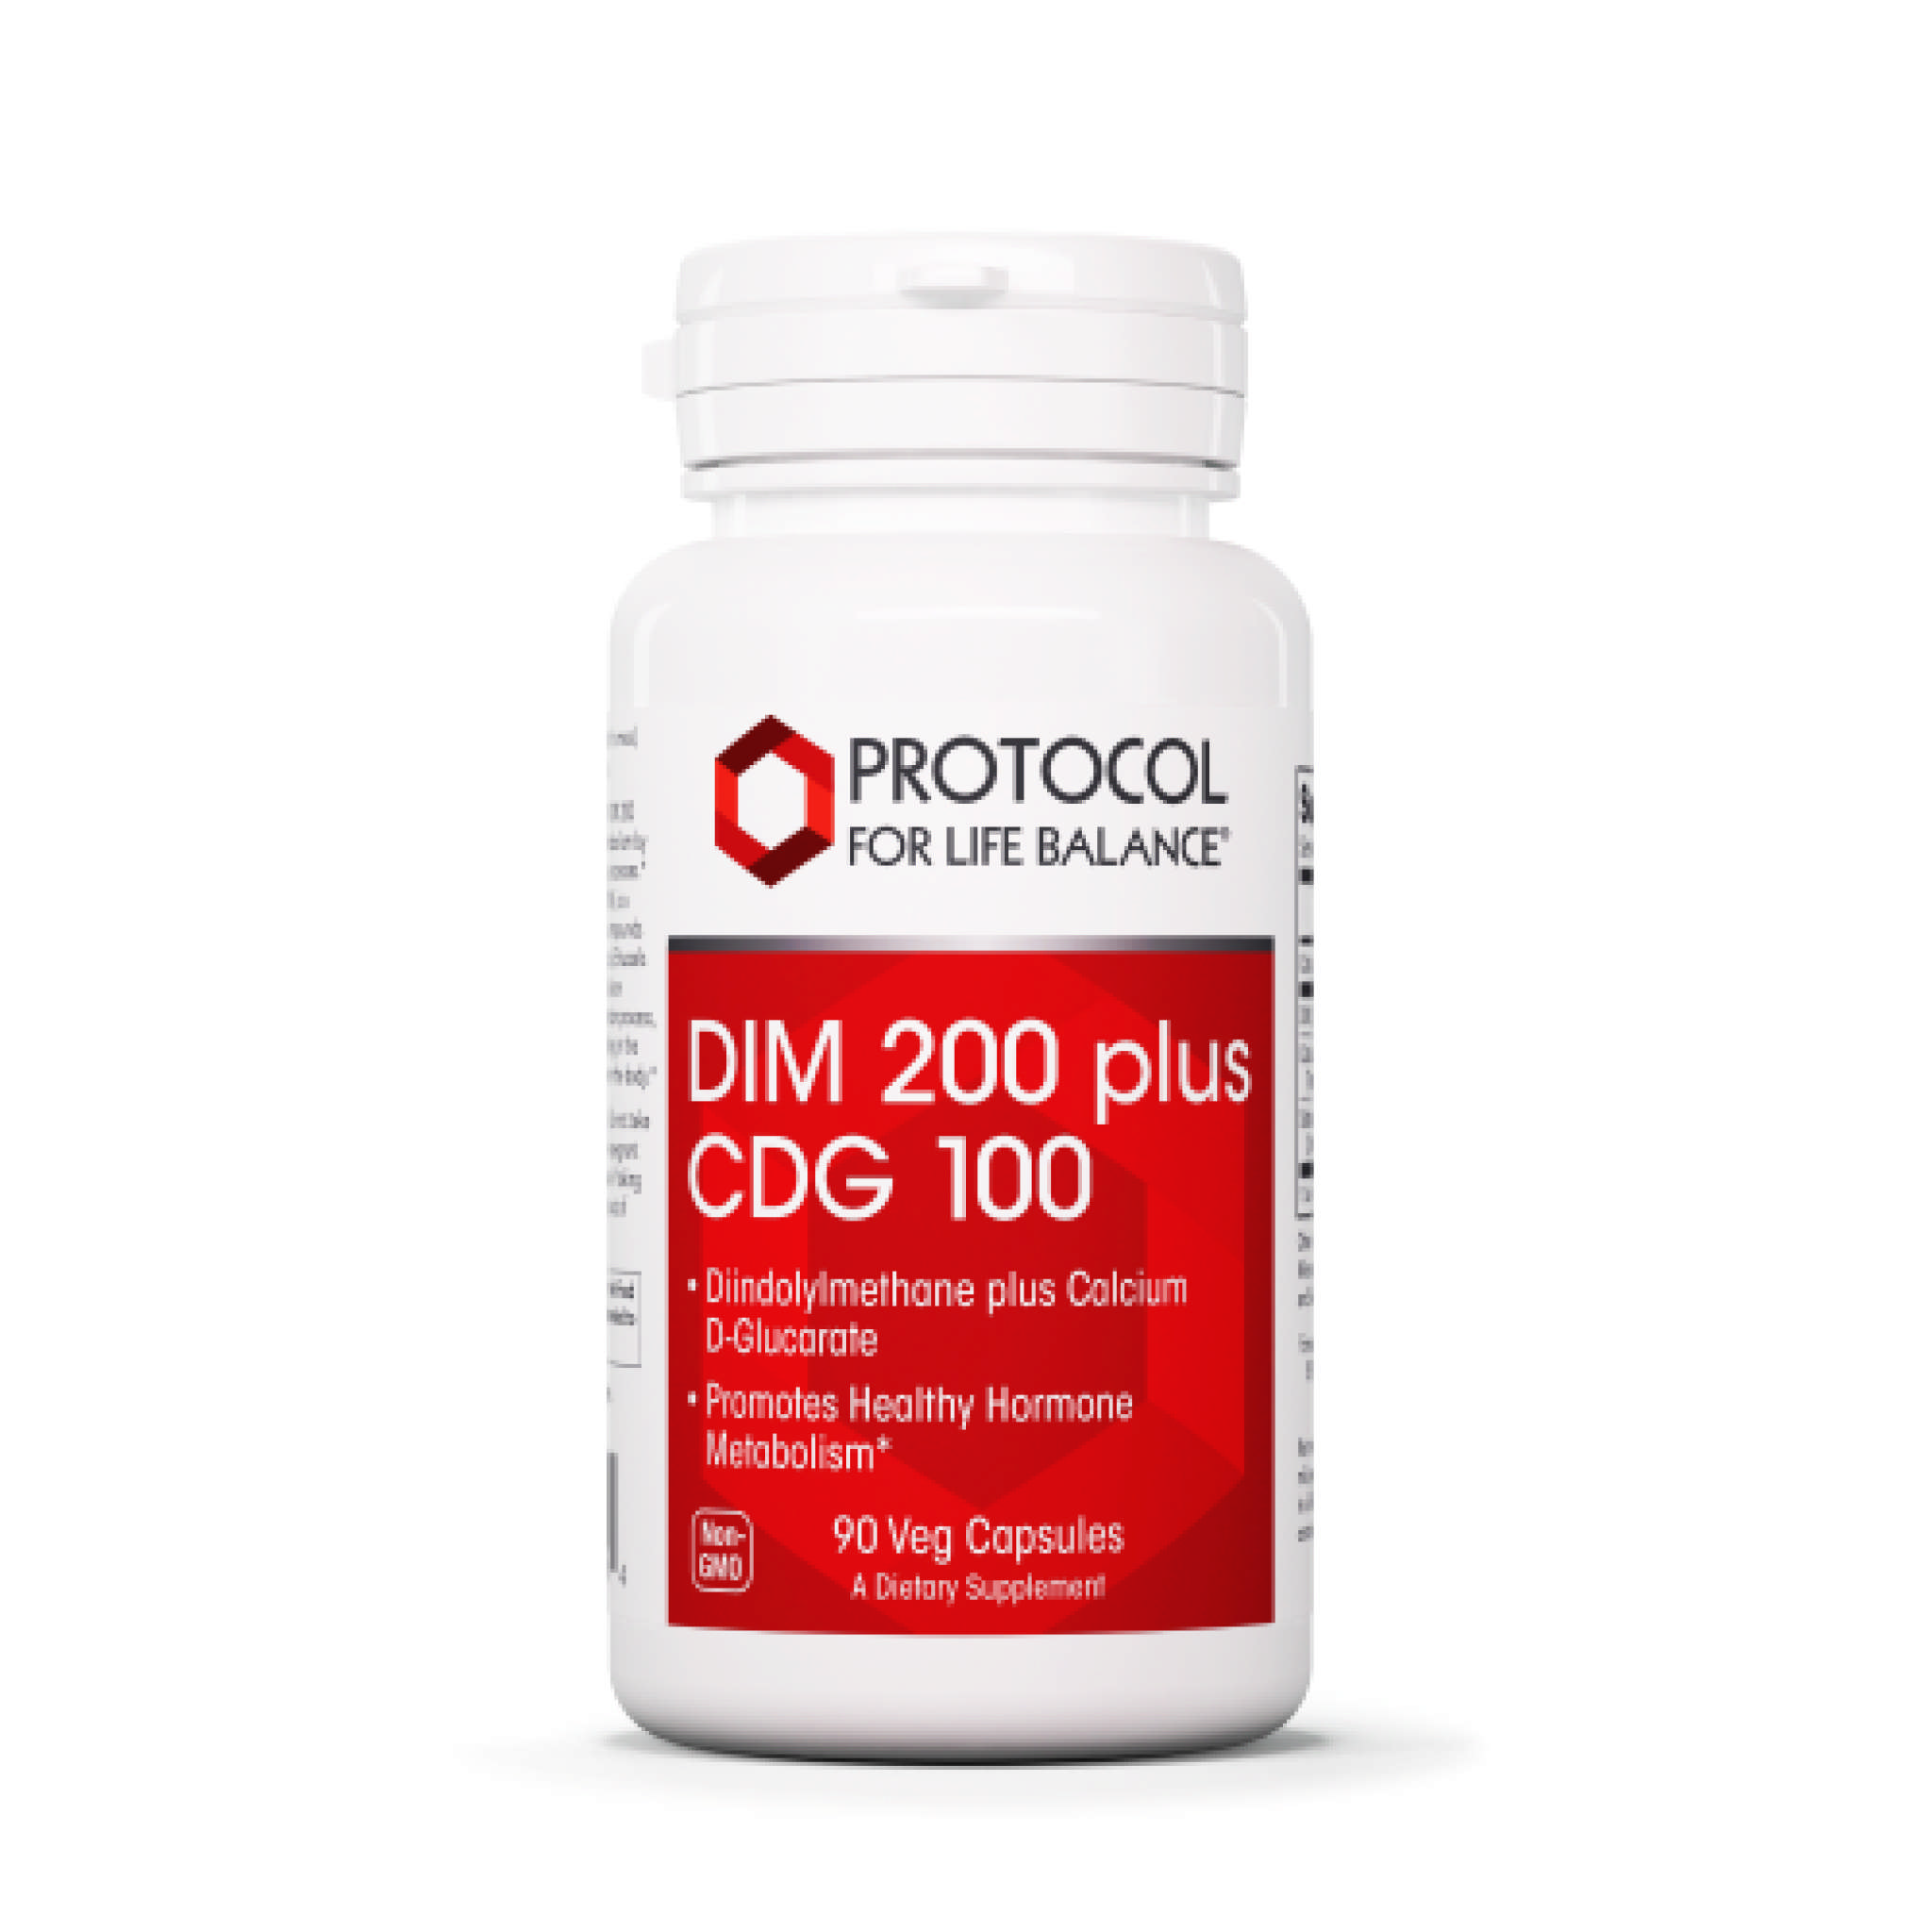 Protocol For Life Balance - Dim 200 Plus Cdg 100 vCap